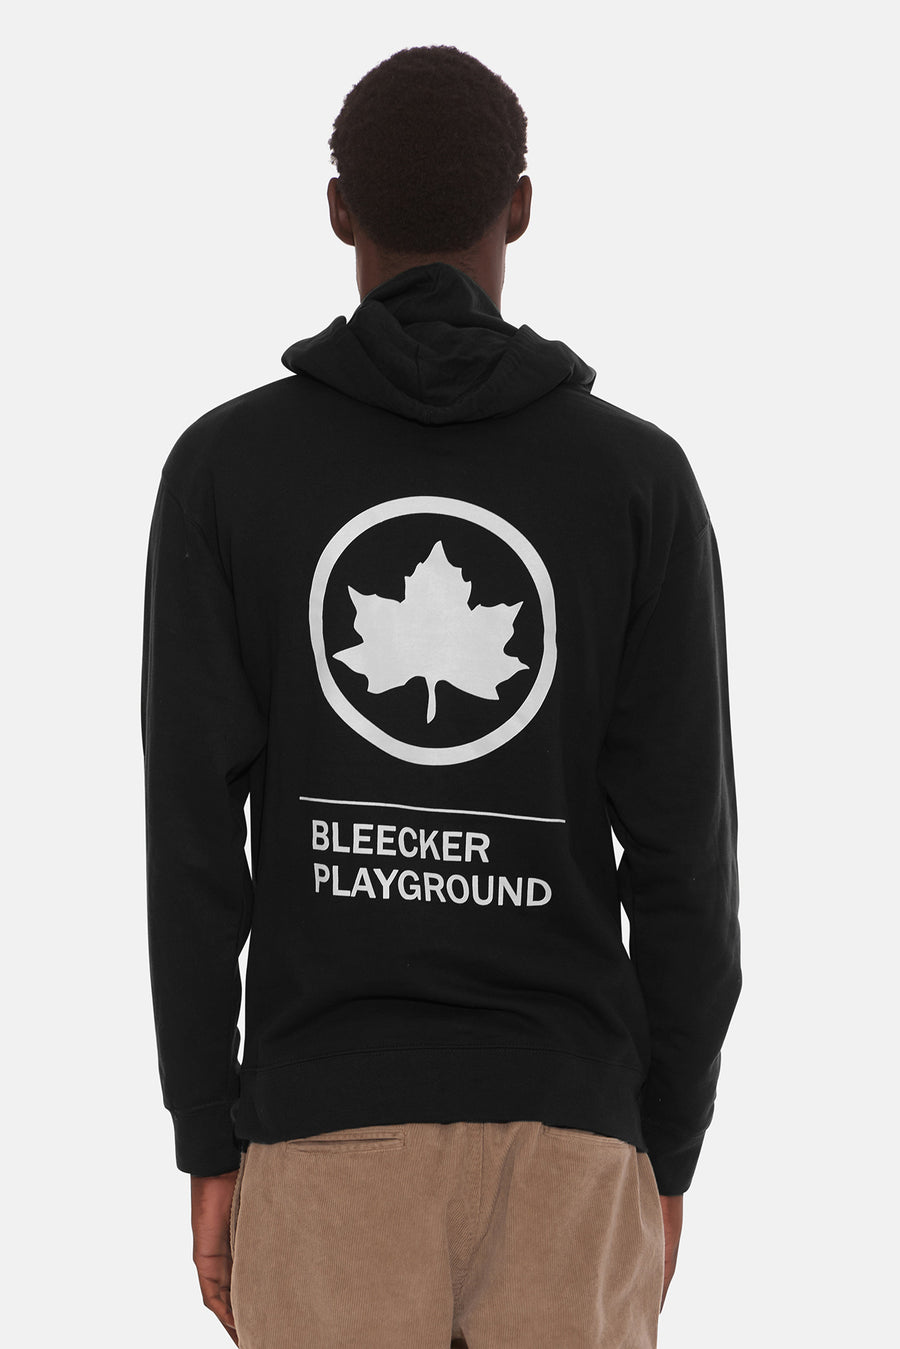 Leaf Bleecker Playground Hoodie Black